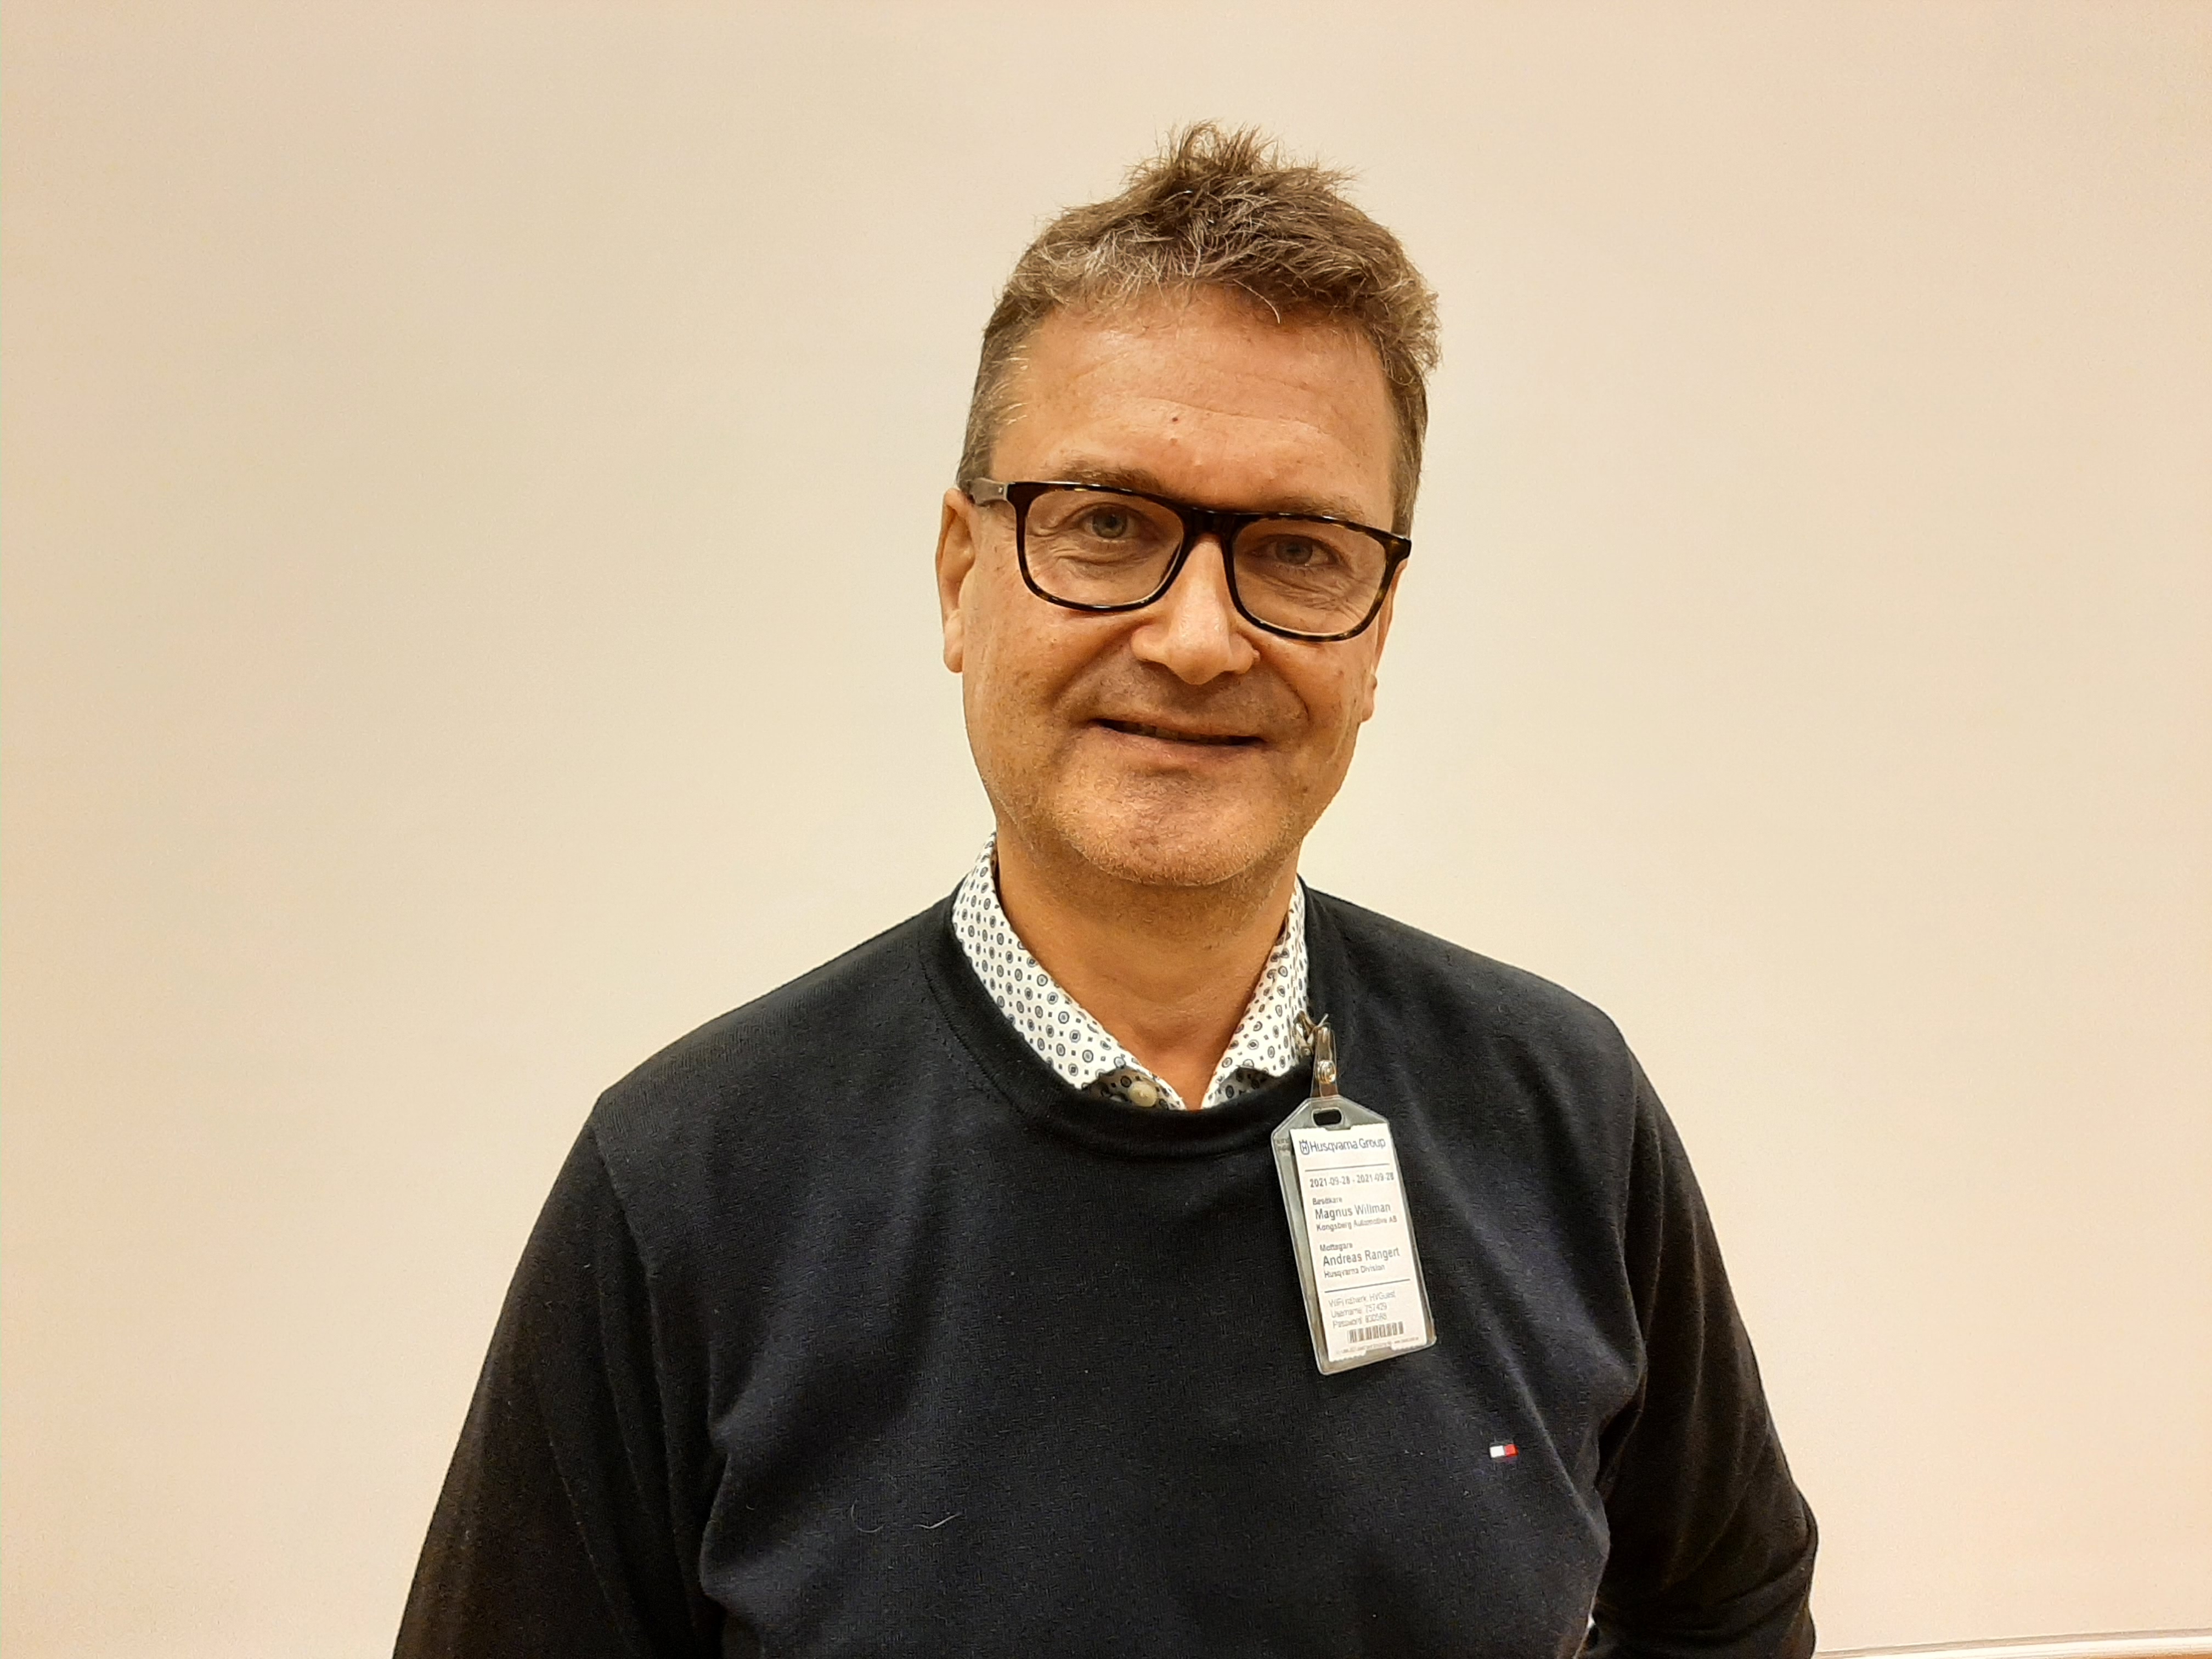 Magnus Willman, Plant Manager at Kongsberg Automotive.